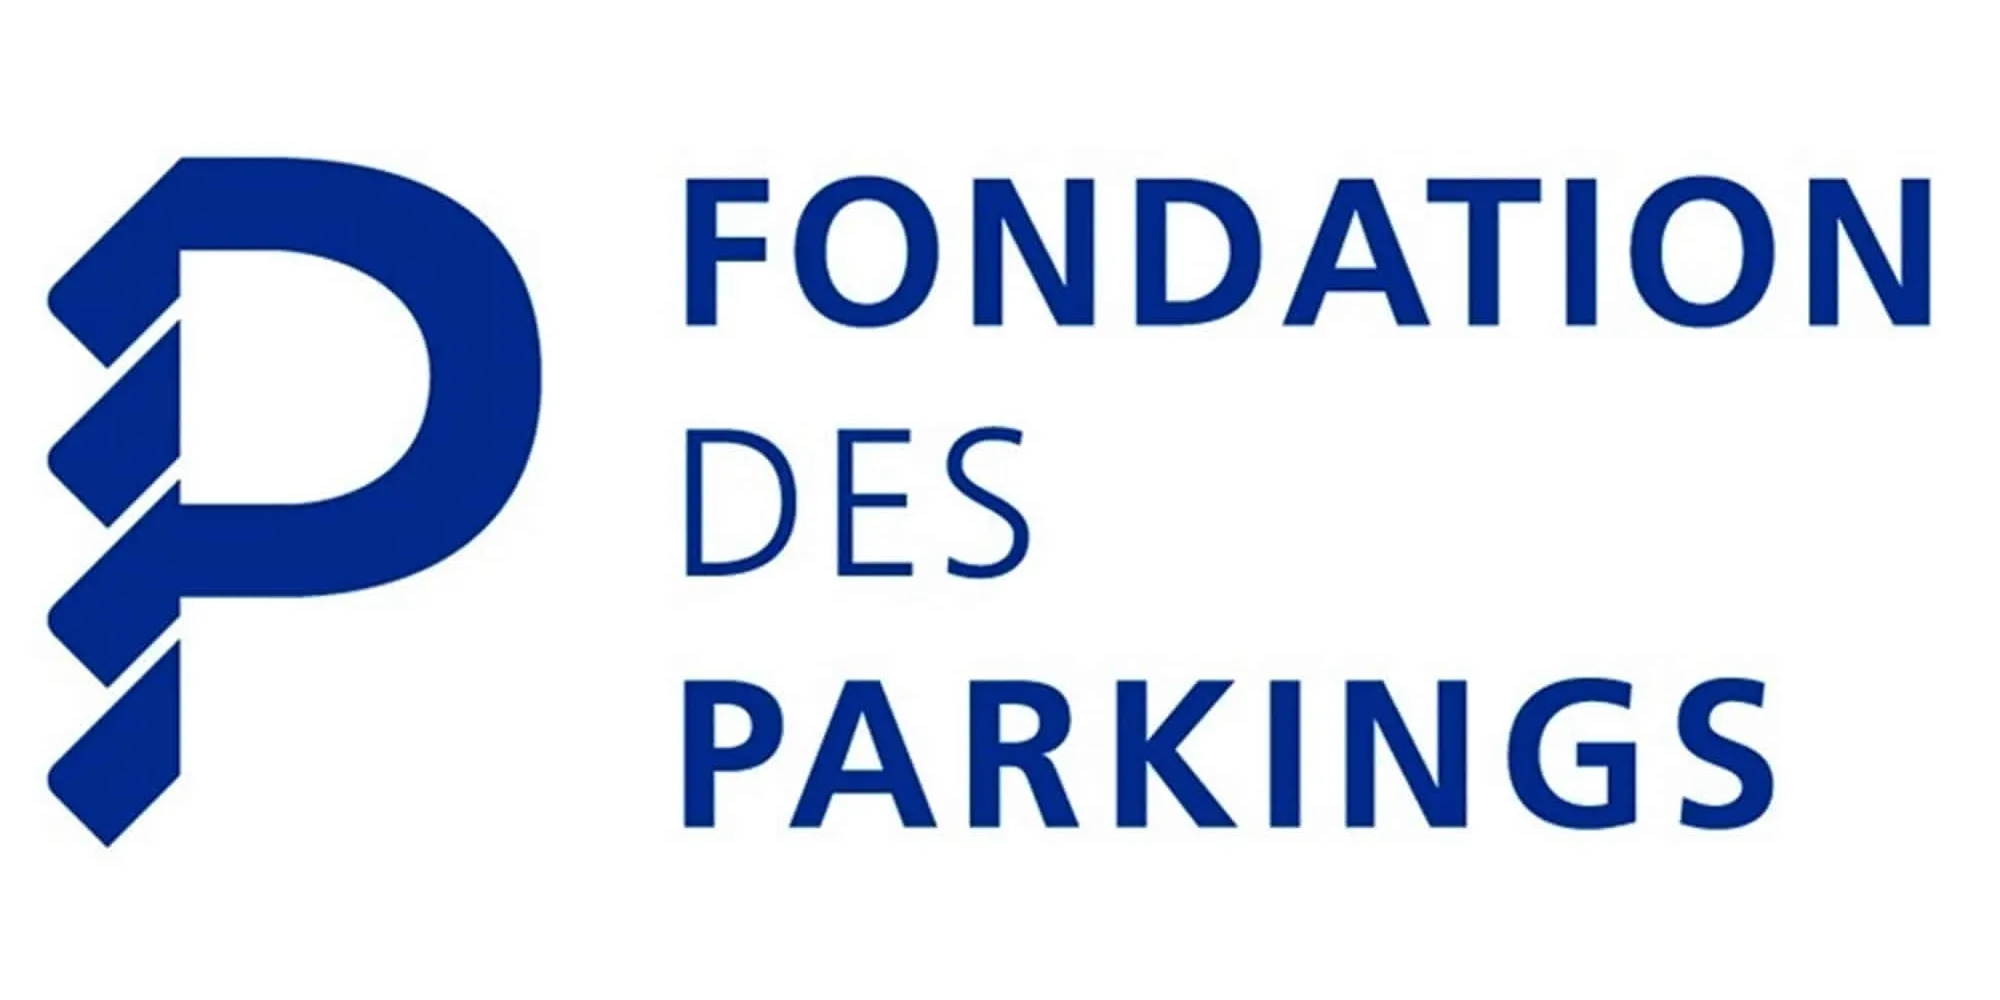 fondation logo